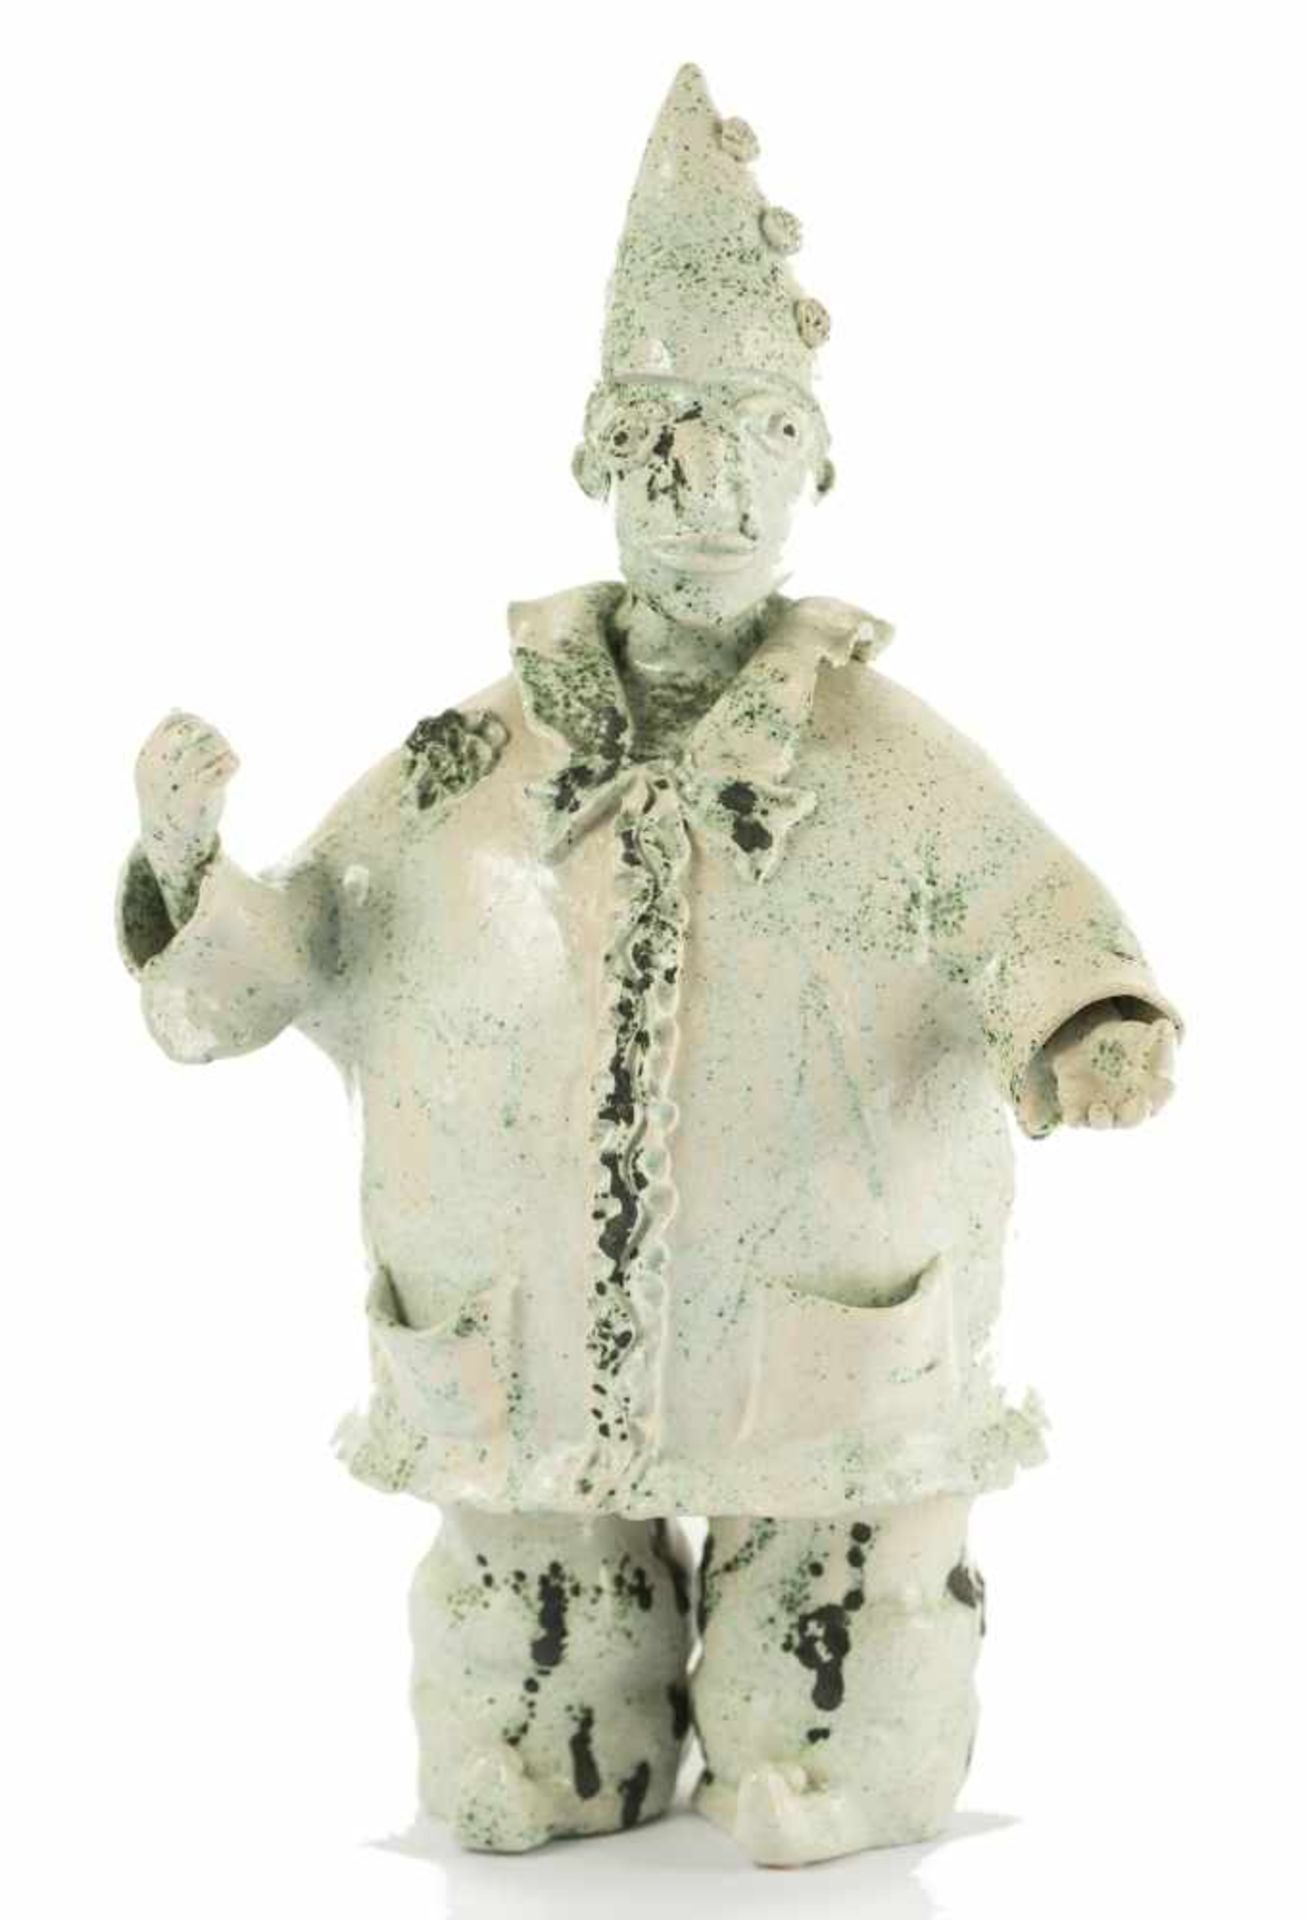 Grosse Keramik-Figur eines Clowns - - ca. 45 cm hochLarge ceramic figure of a clown, ca. 45 cm